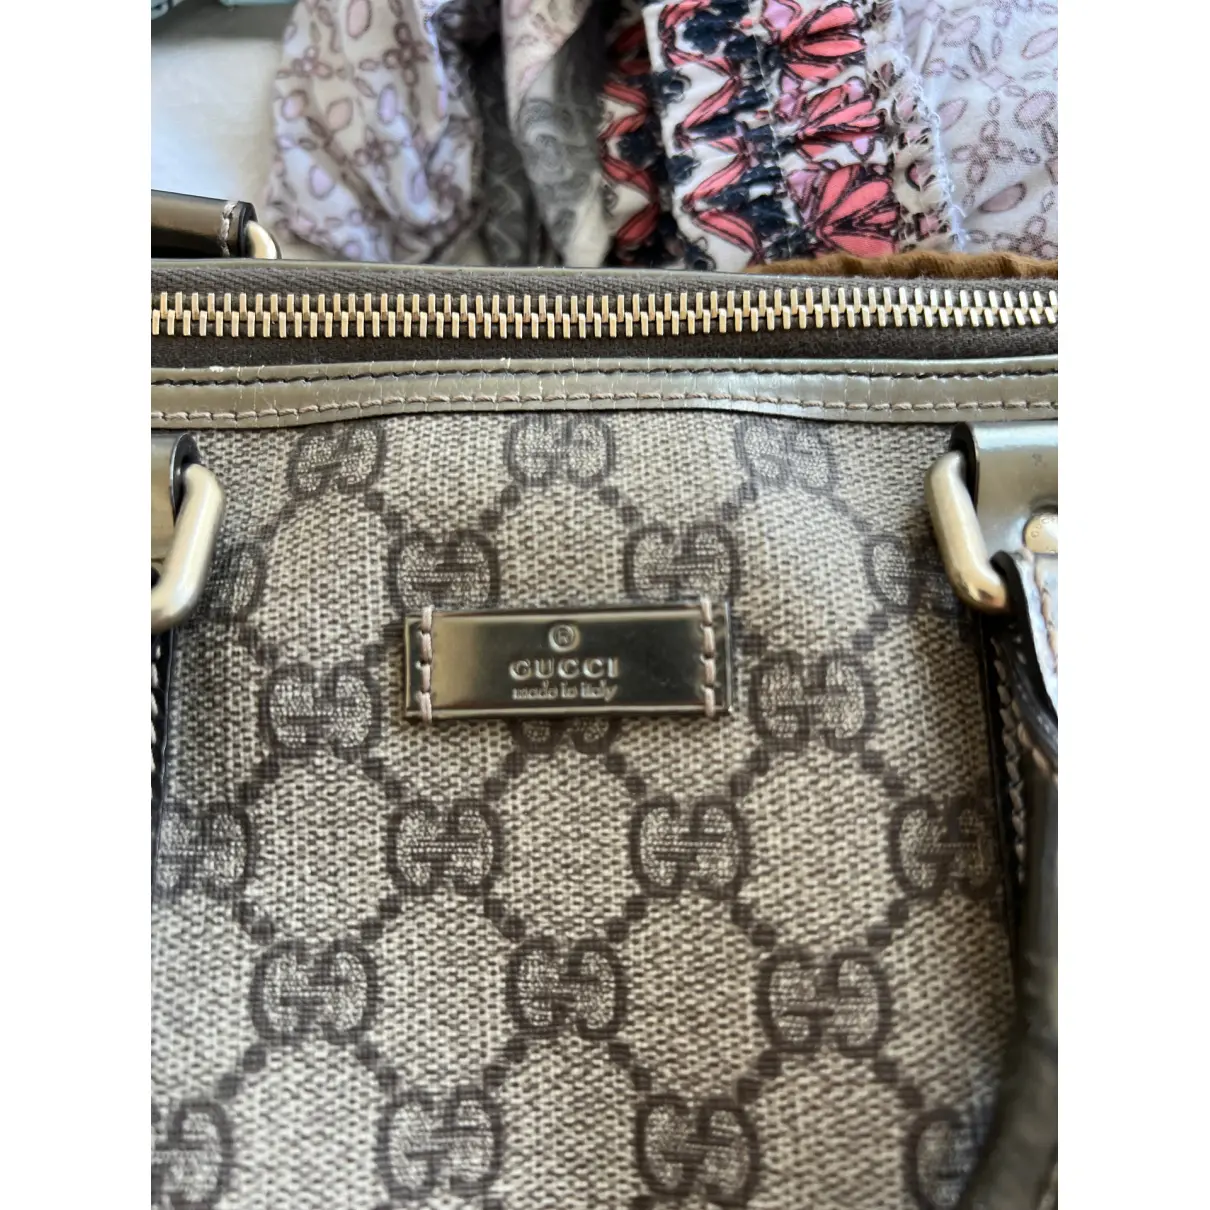 Buy Gucci Boston leather mini bag online